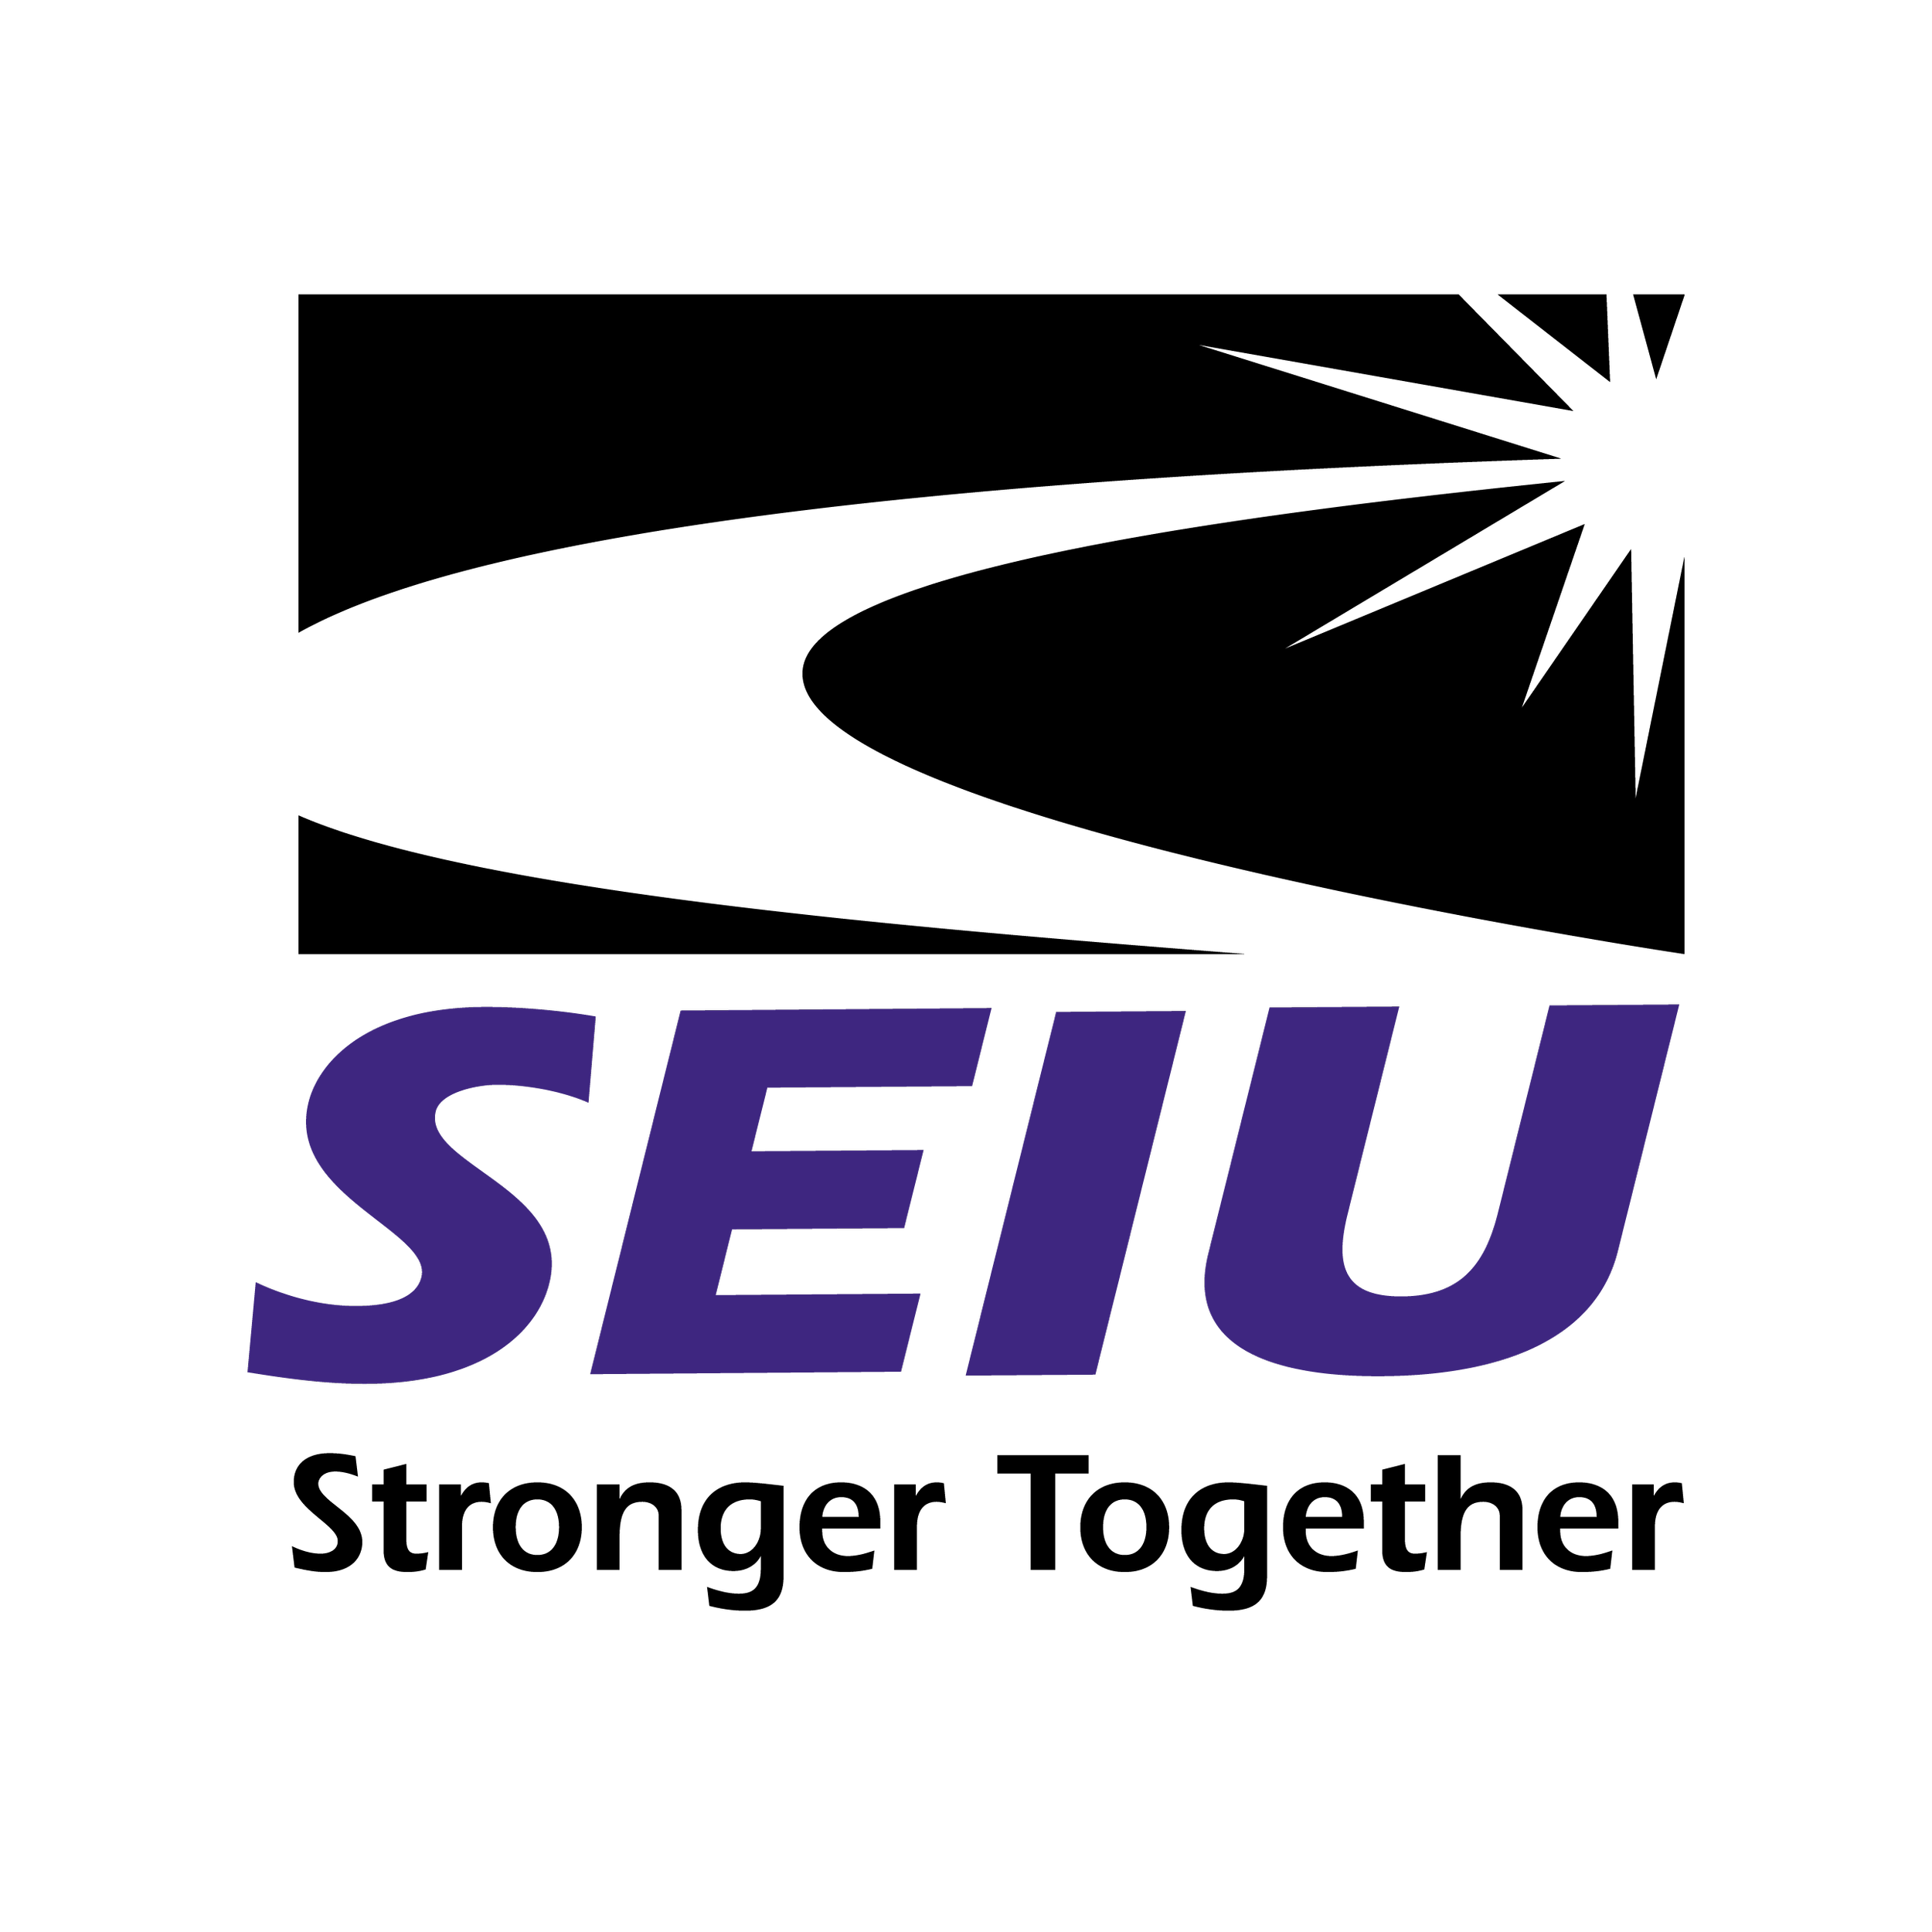 SEIU-logo-lite.png